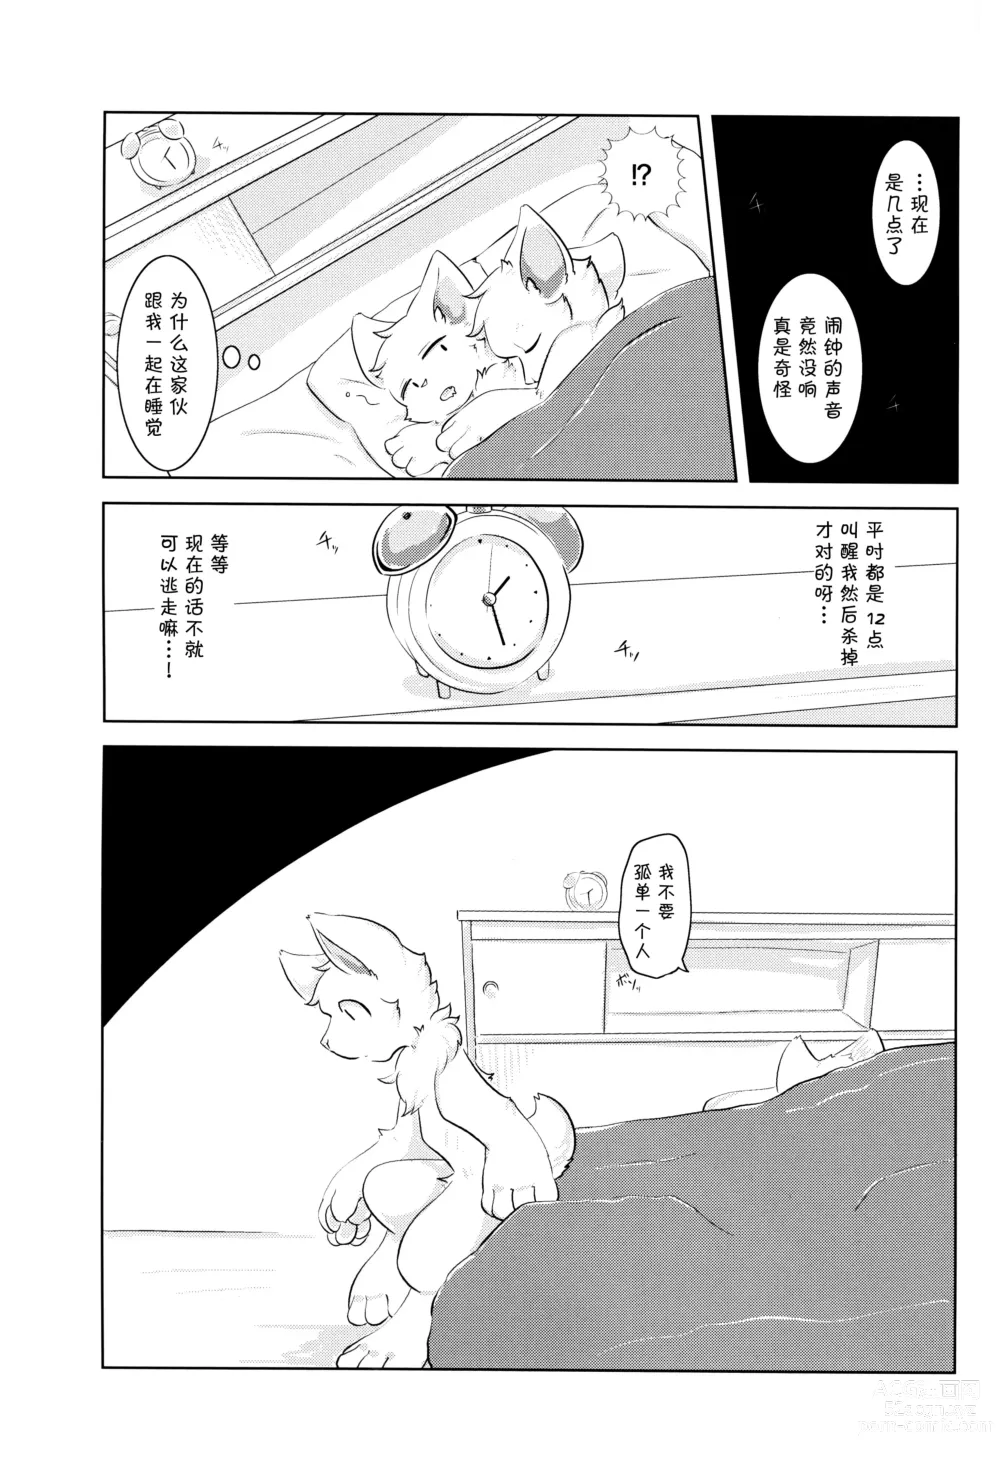 Page 20 of doujinshi 啊啊，亲爱的不死猫